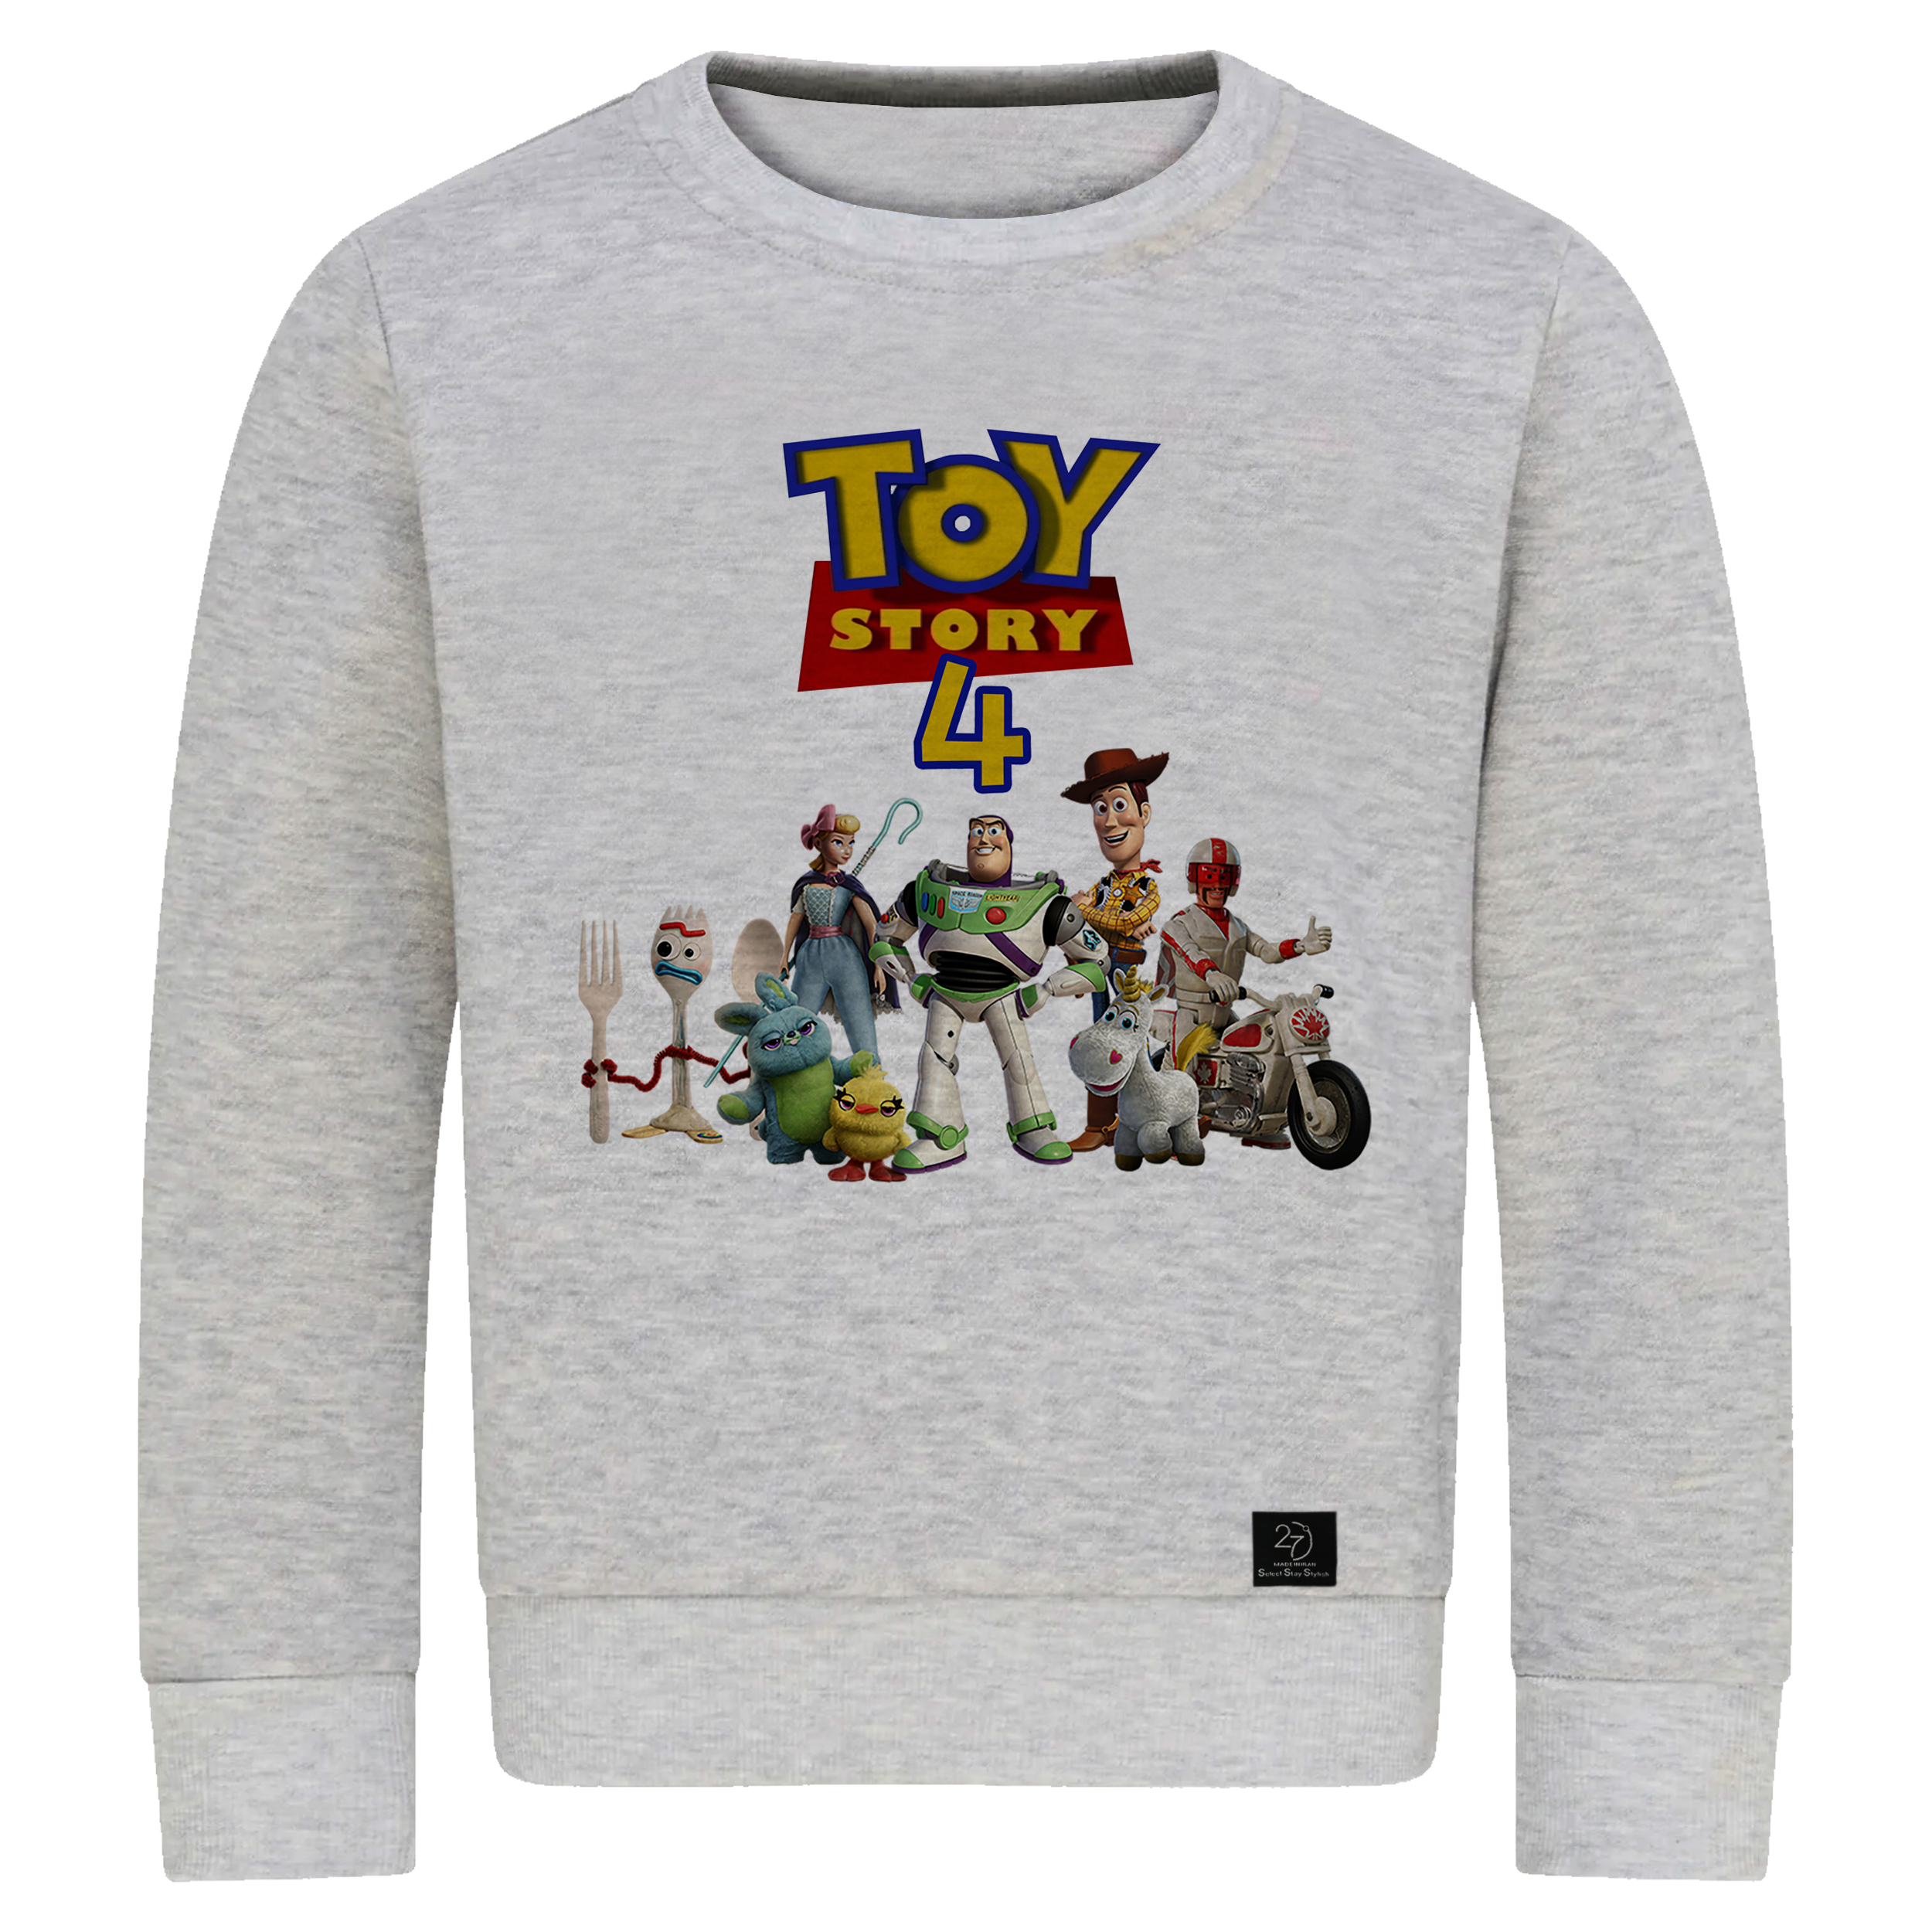 سویشرت پسرانه 27 مدل Toy Story کد B10 رنگ طوسی روشن